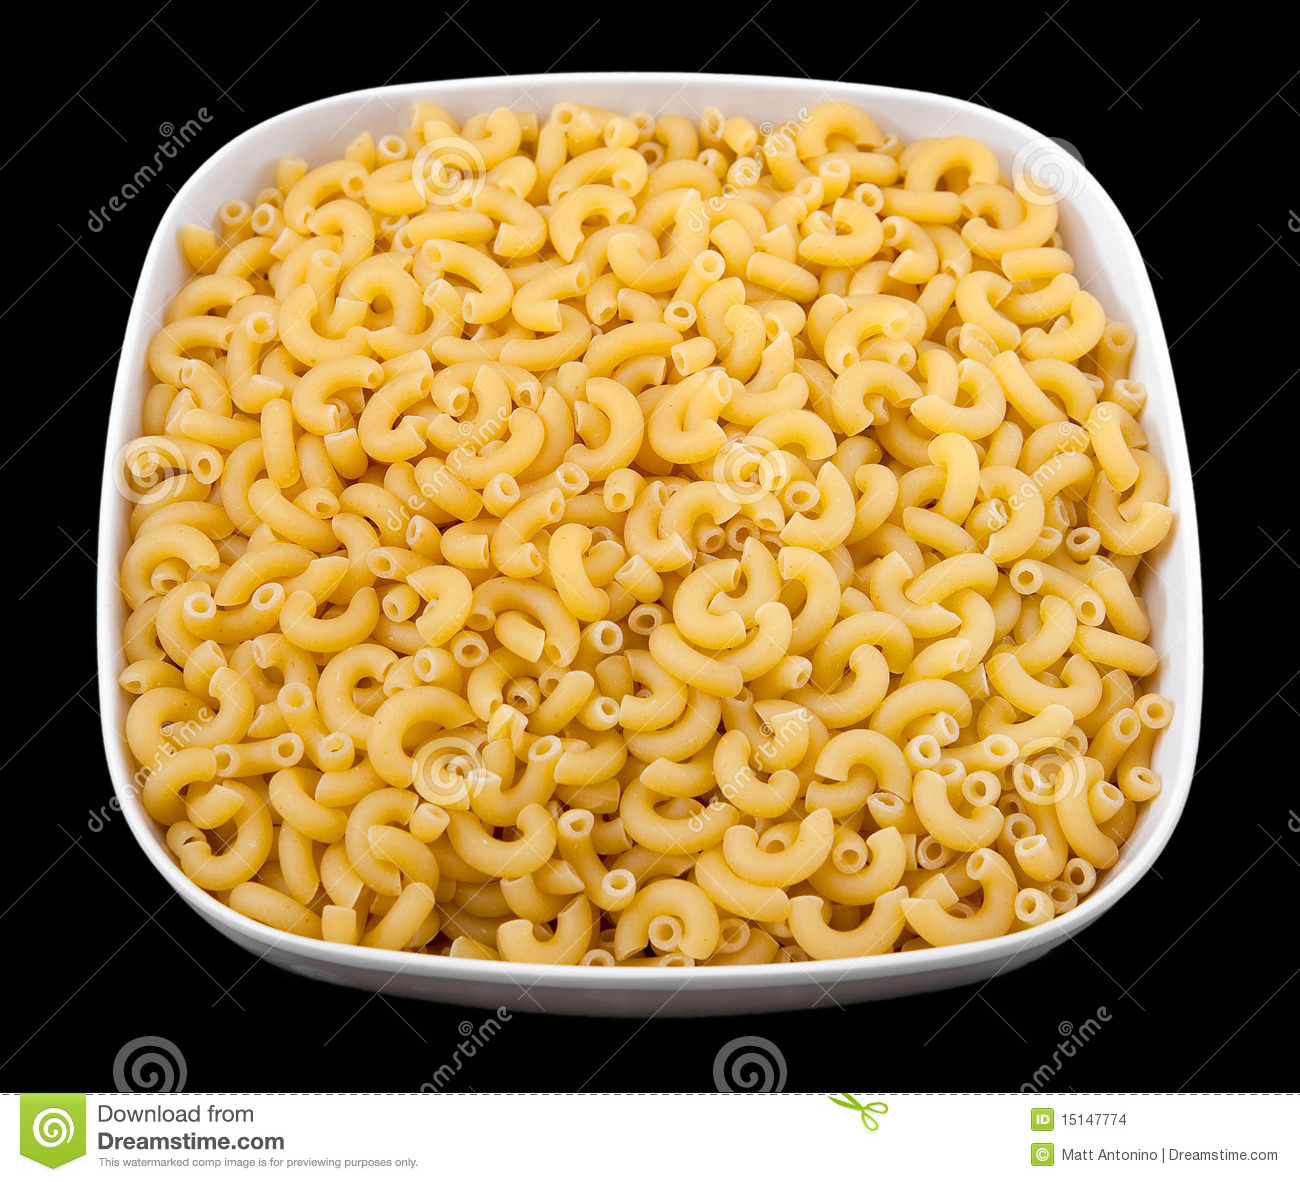 Macaroni And Cheese Clipart Black And White Bowl Of Macaroni